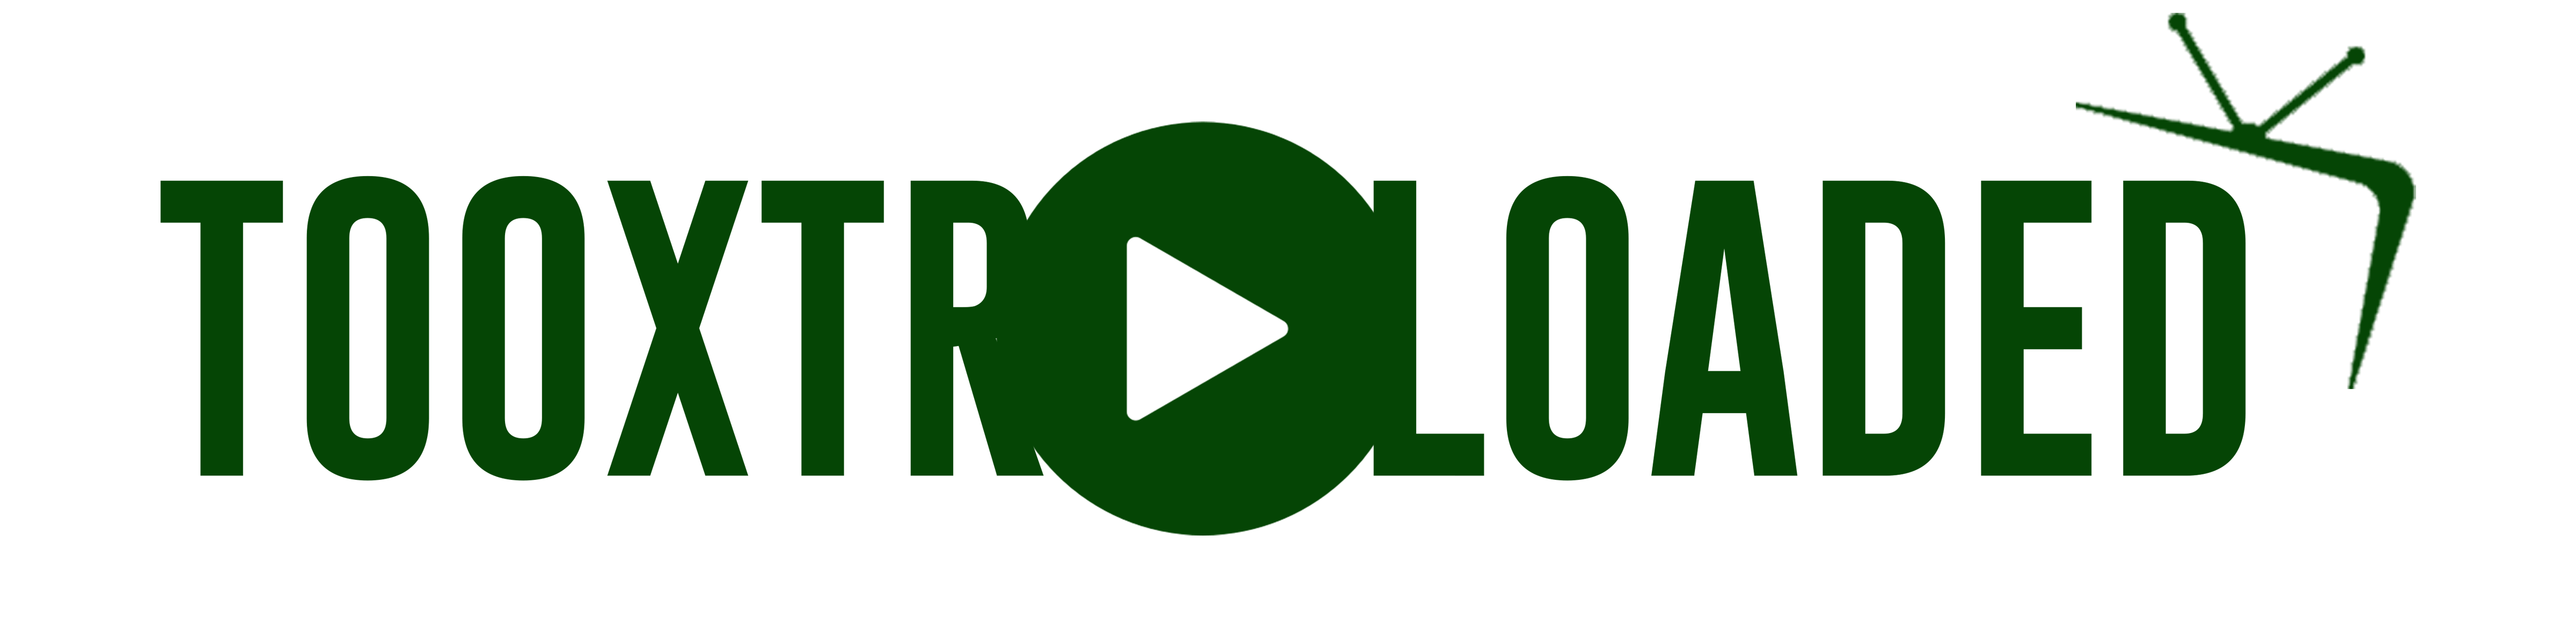 Tooxtraloaded | Nigeria's Online Entertainment Hub